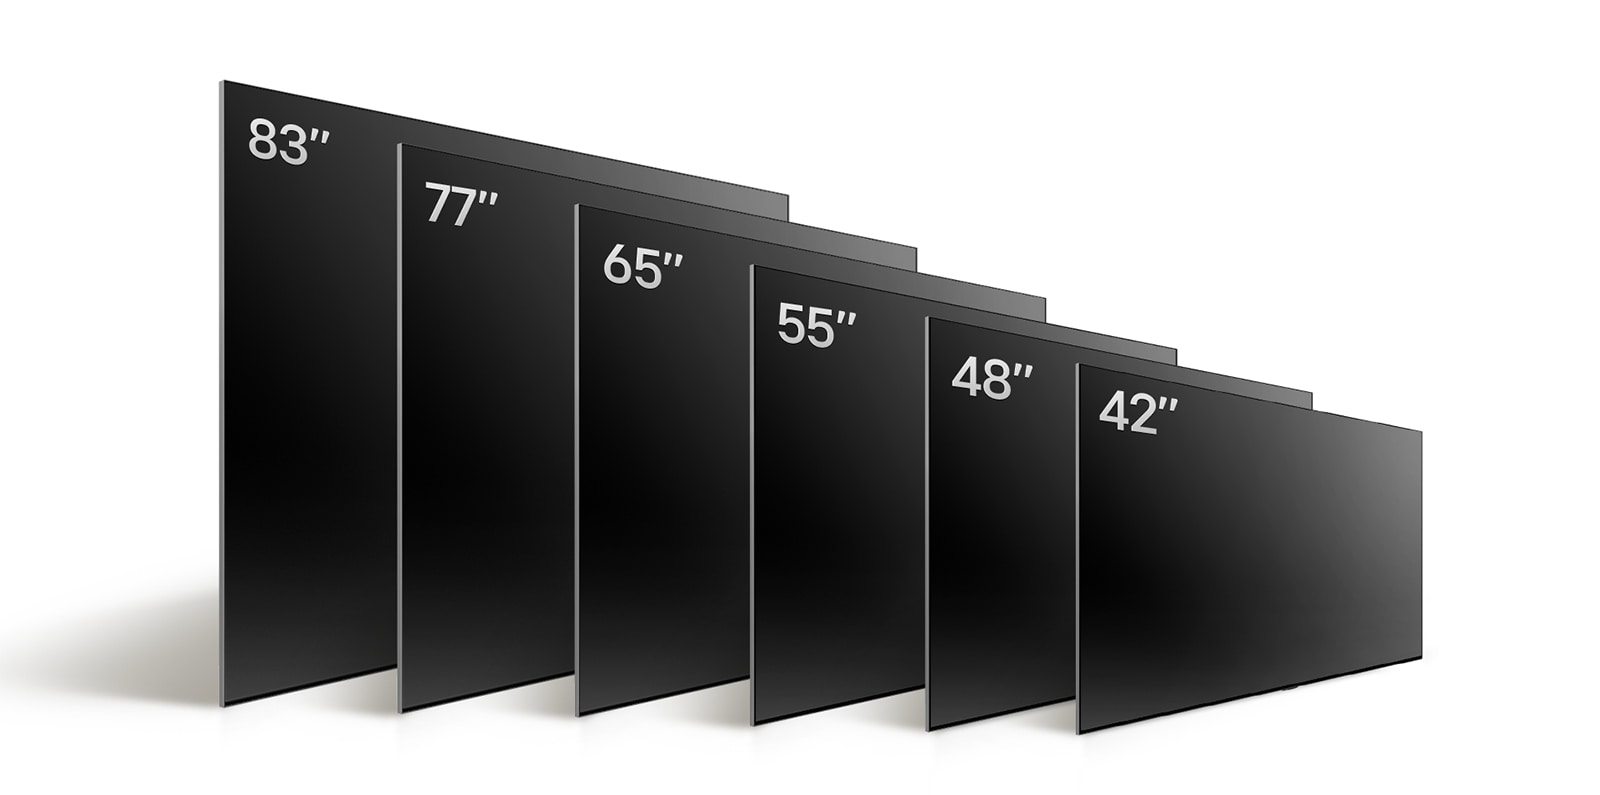 Primerjava LG OLED TV, OLED C4 različnih velikosti prikazuje 42-palčni OLED C4, 48-palčni OLED, 55-palčni OLED C4, 65-palčni OLED C4, 77-palčni OLED C4 in 83-palčni OLED C4.